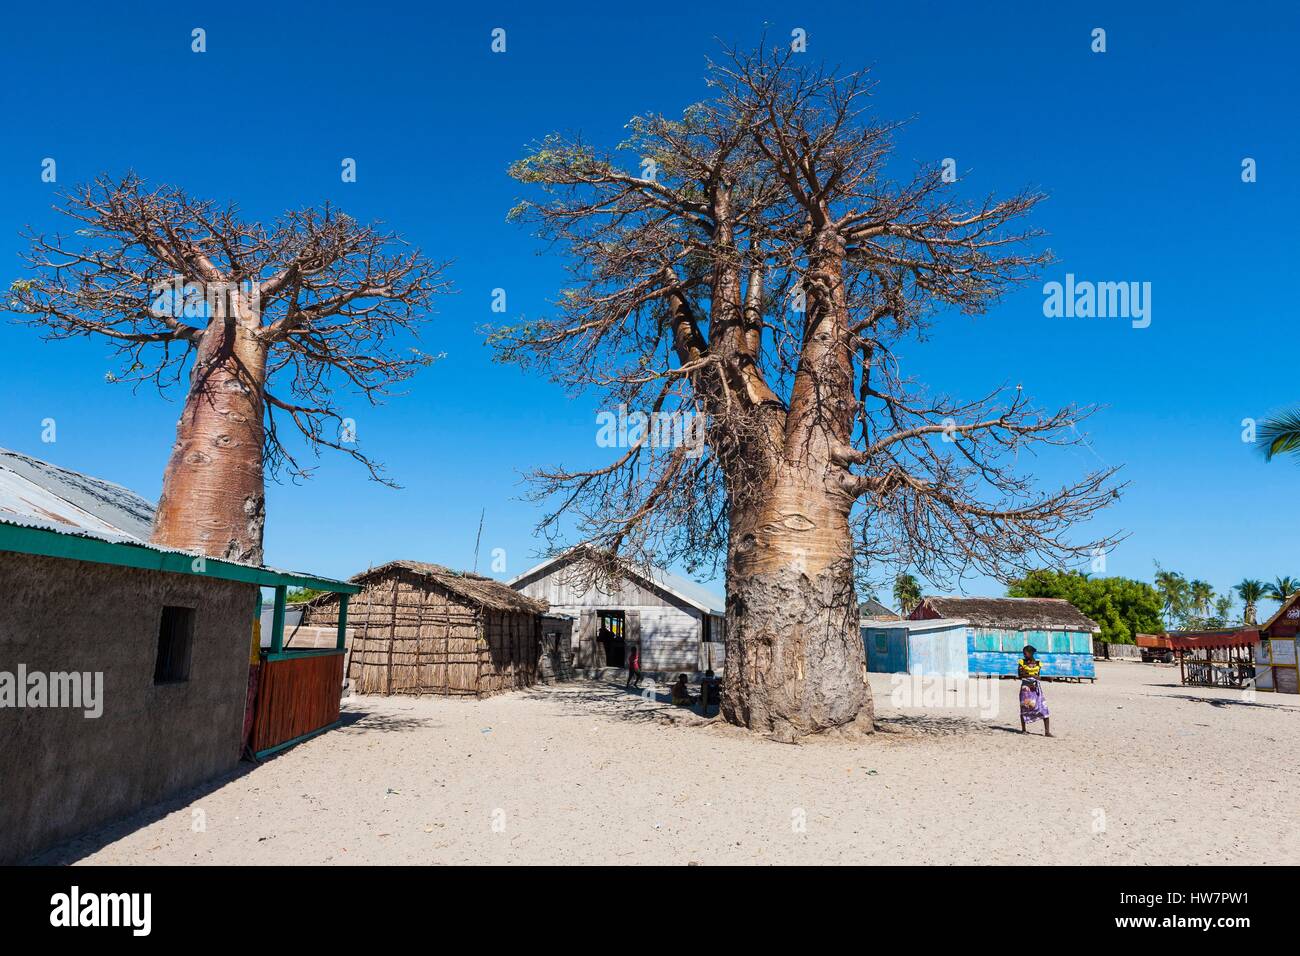 Madagascar, Menabe region, Belo sur Mer, woman and baobab in the village Stock Photo